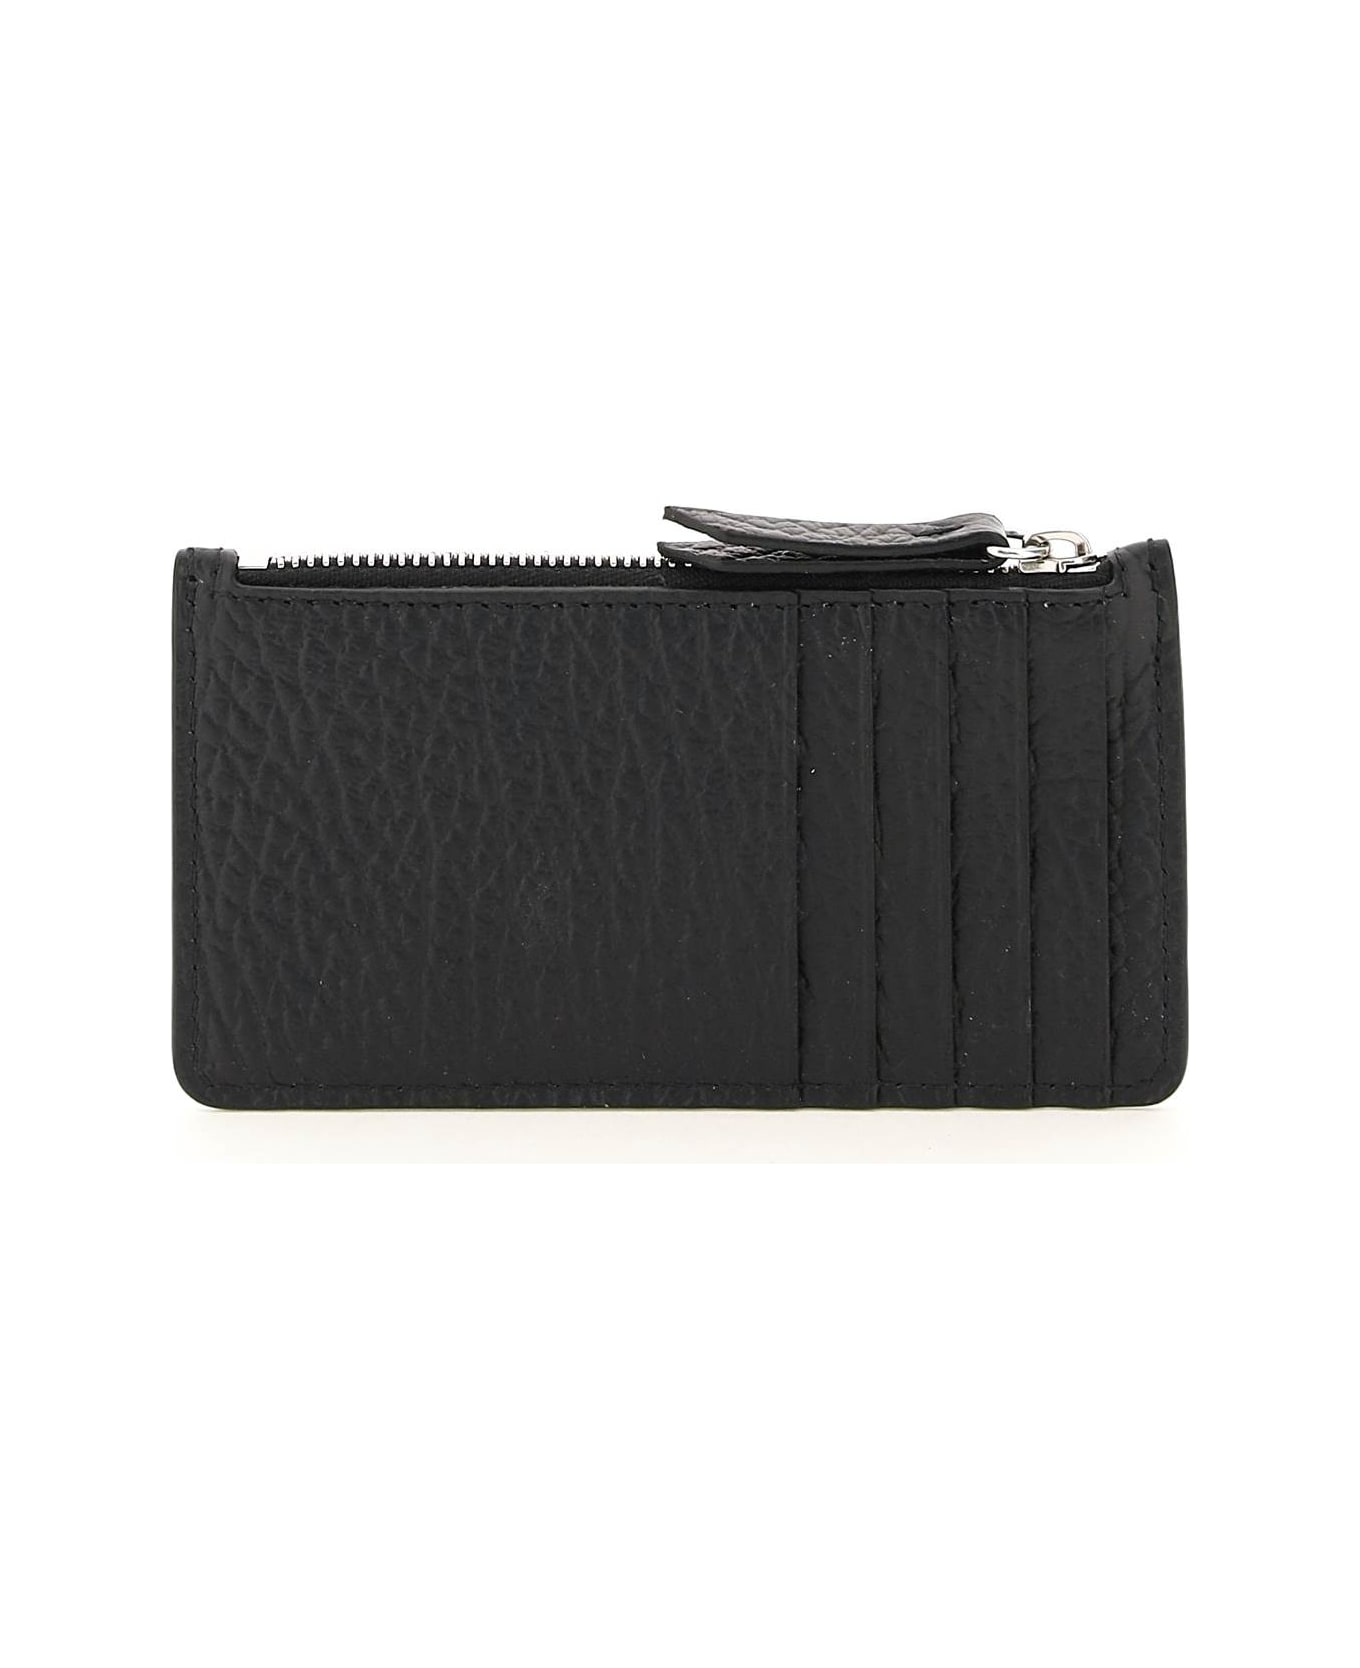 Maison Margiela Leather Zipped Cardholder | italist, ALWAYS LIKE A SALE